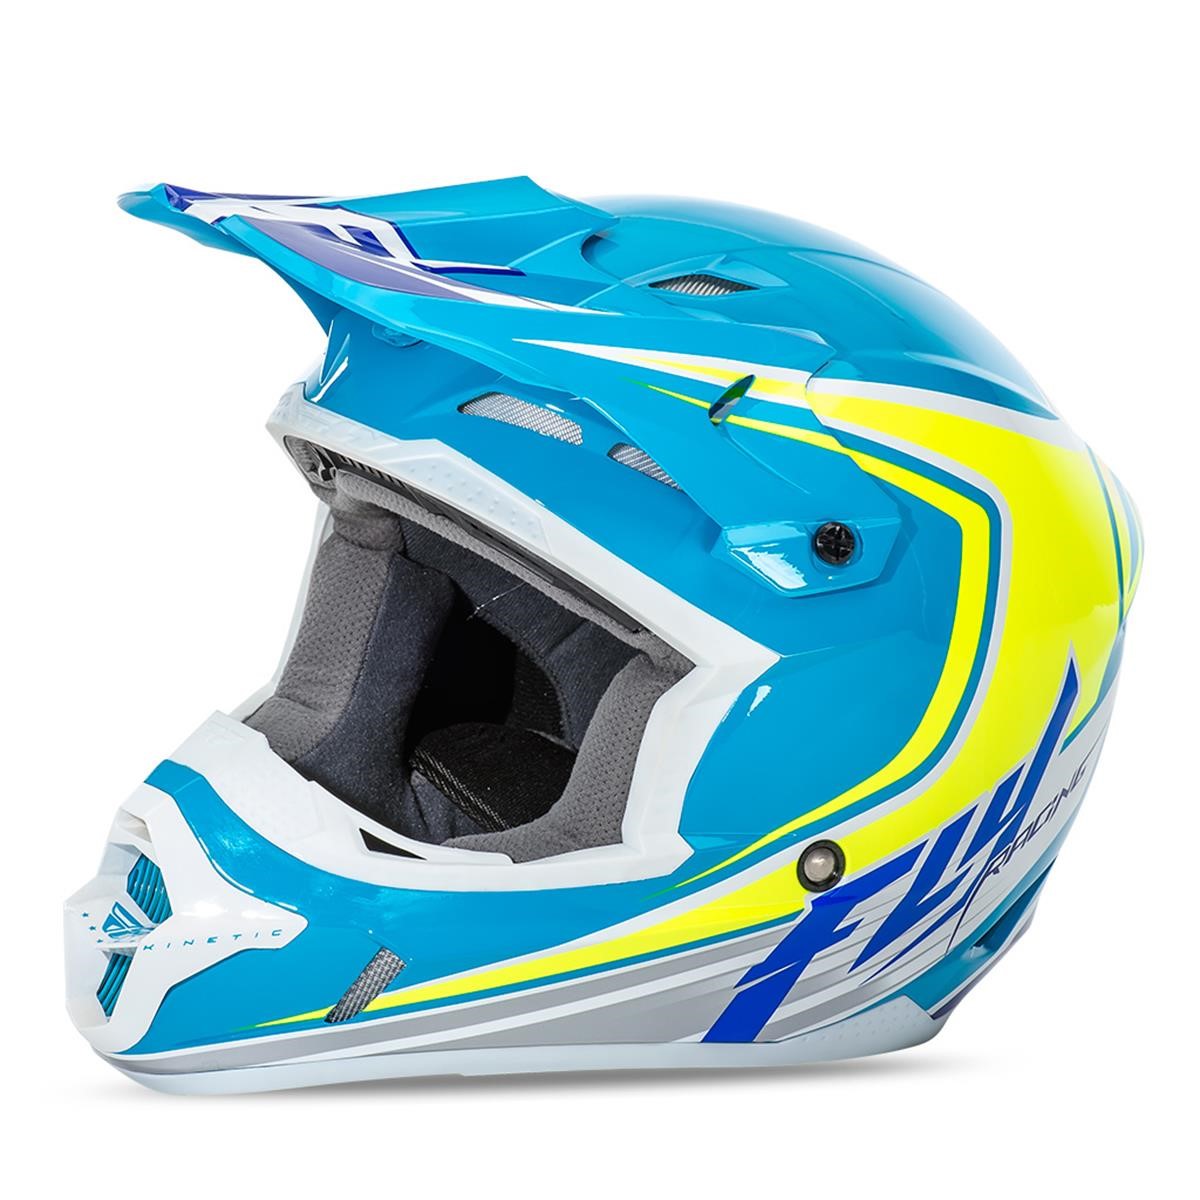 Fly Racing Helm Kinetic Fullspeed Blau/Grün/Weiß